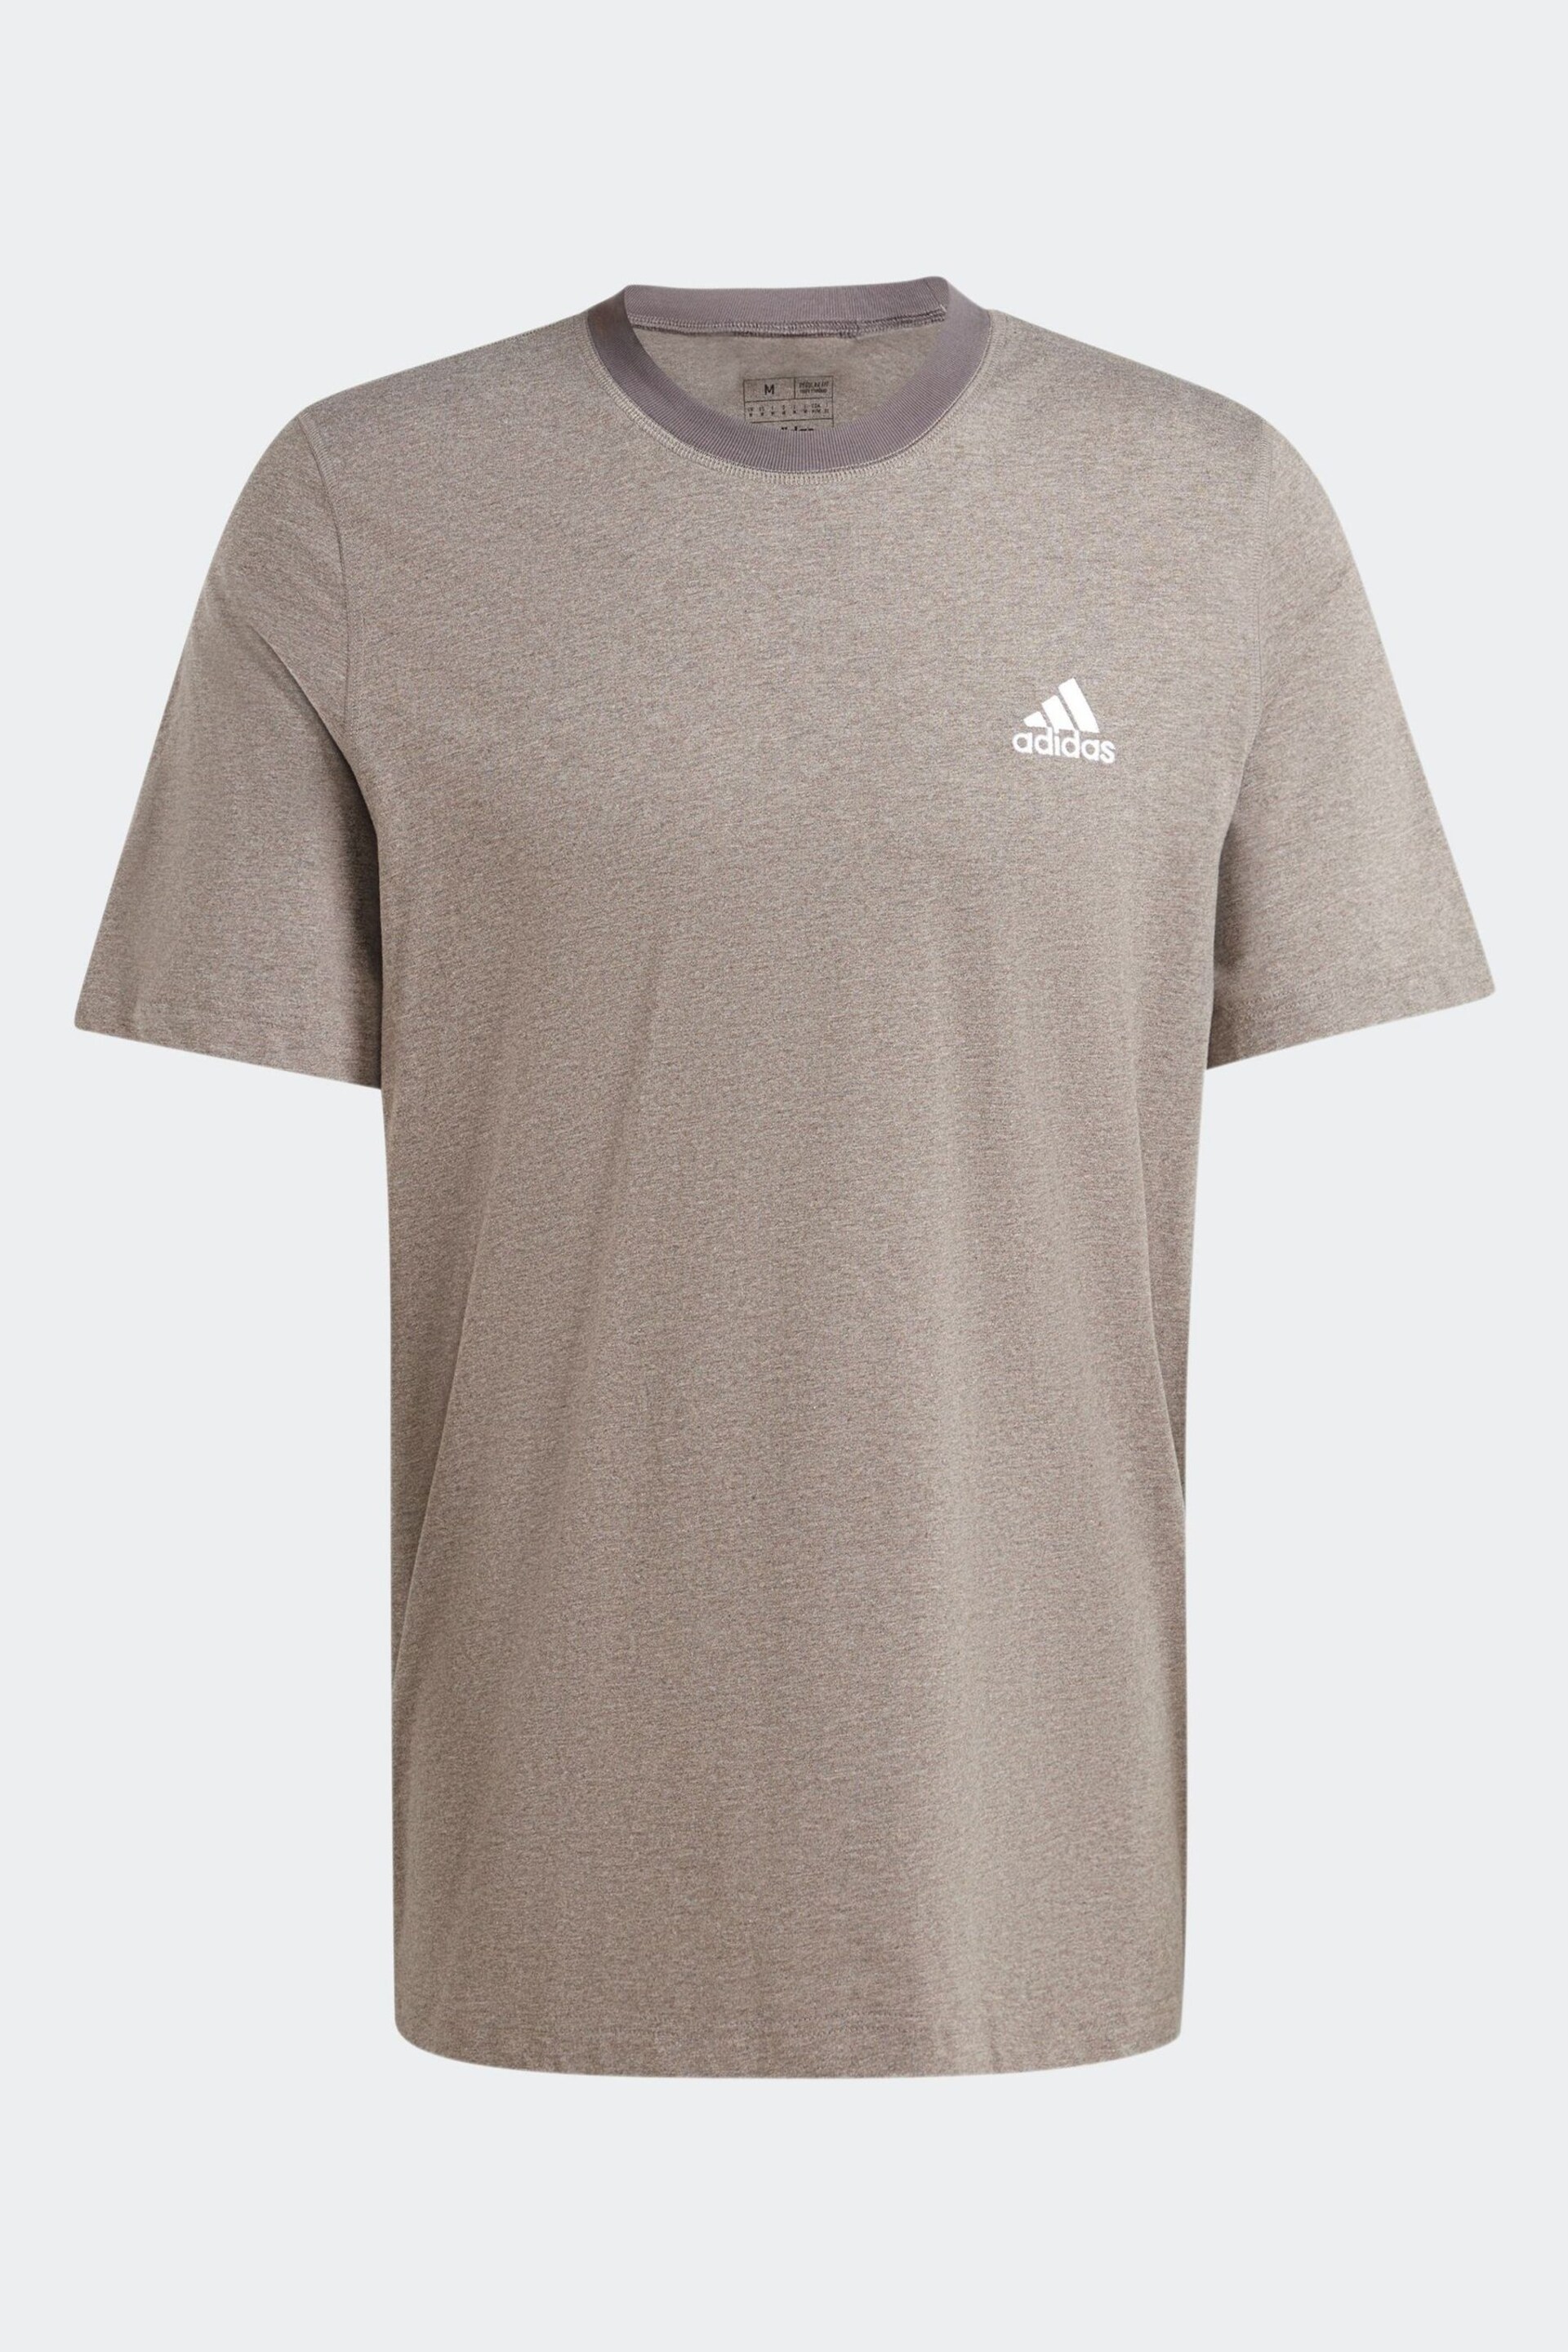 Adidas Grey Sportswear Seasonal Essentials Mélange T-Shirt - Image 8 of 8